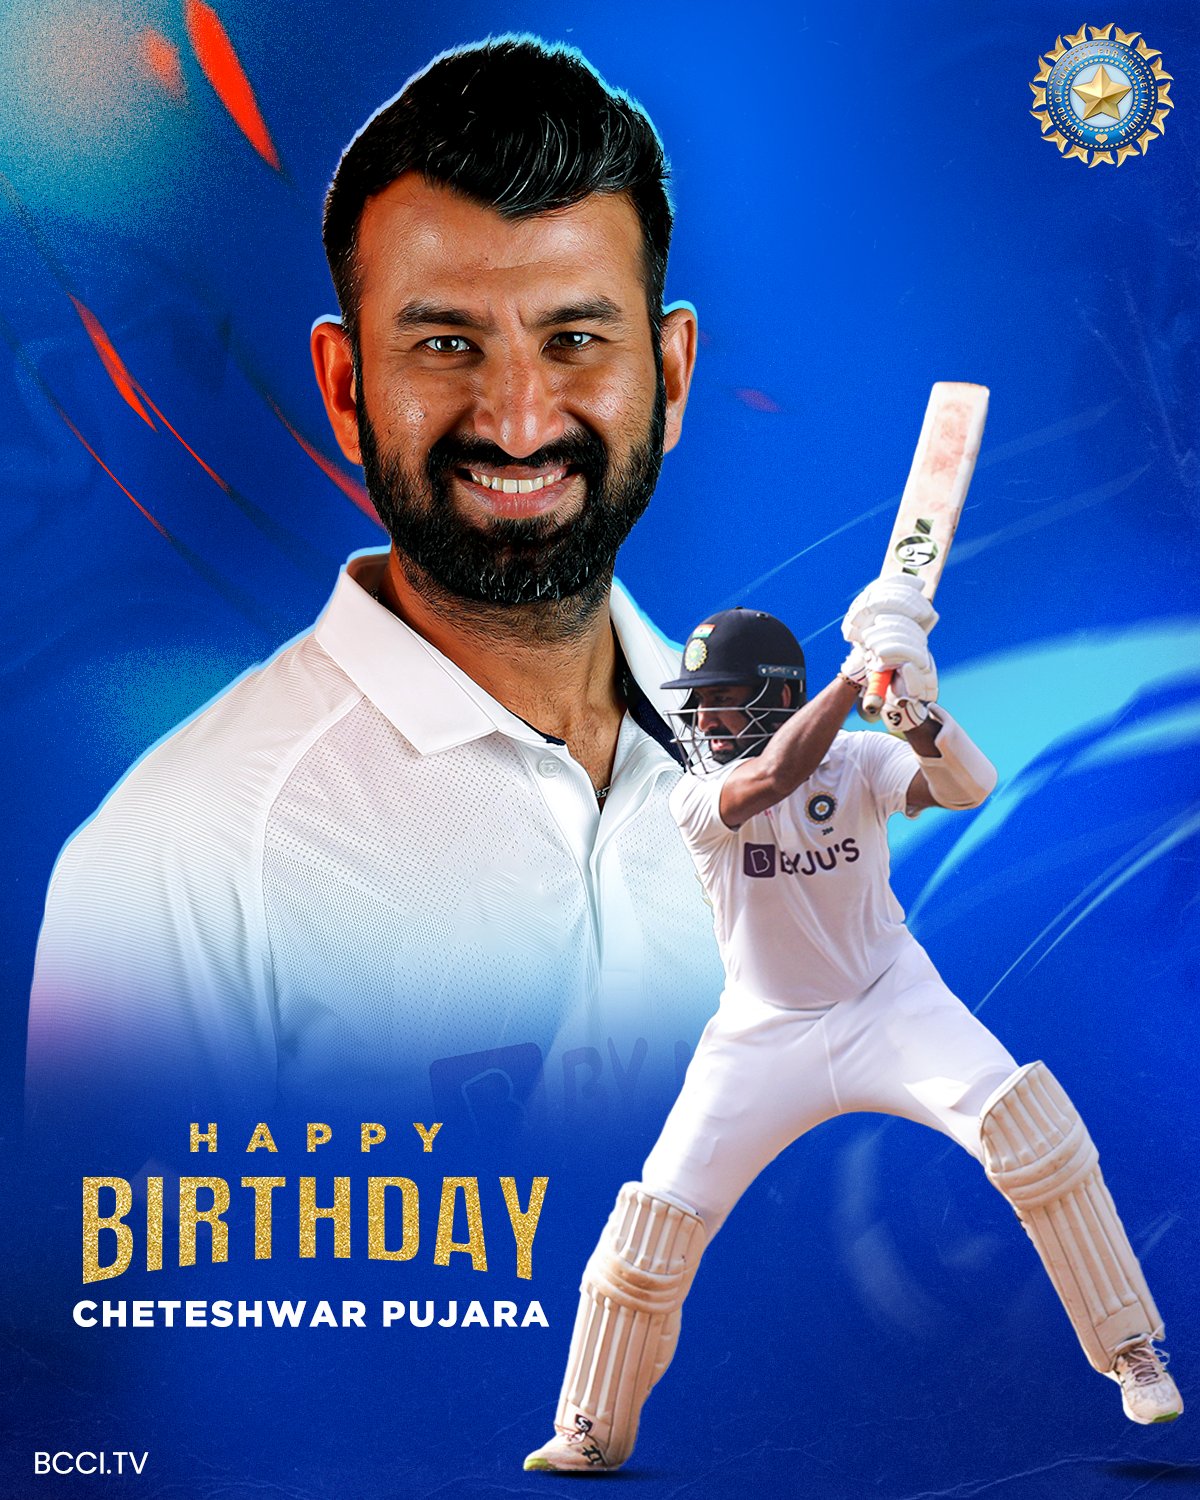 Wish you a very Happy Birthday
Greatest batsman of Indian cricket
Cheteshwar Pujara. 